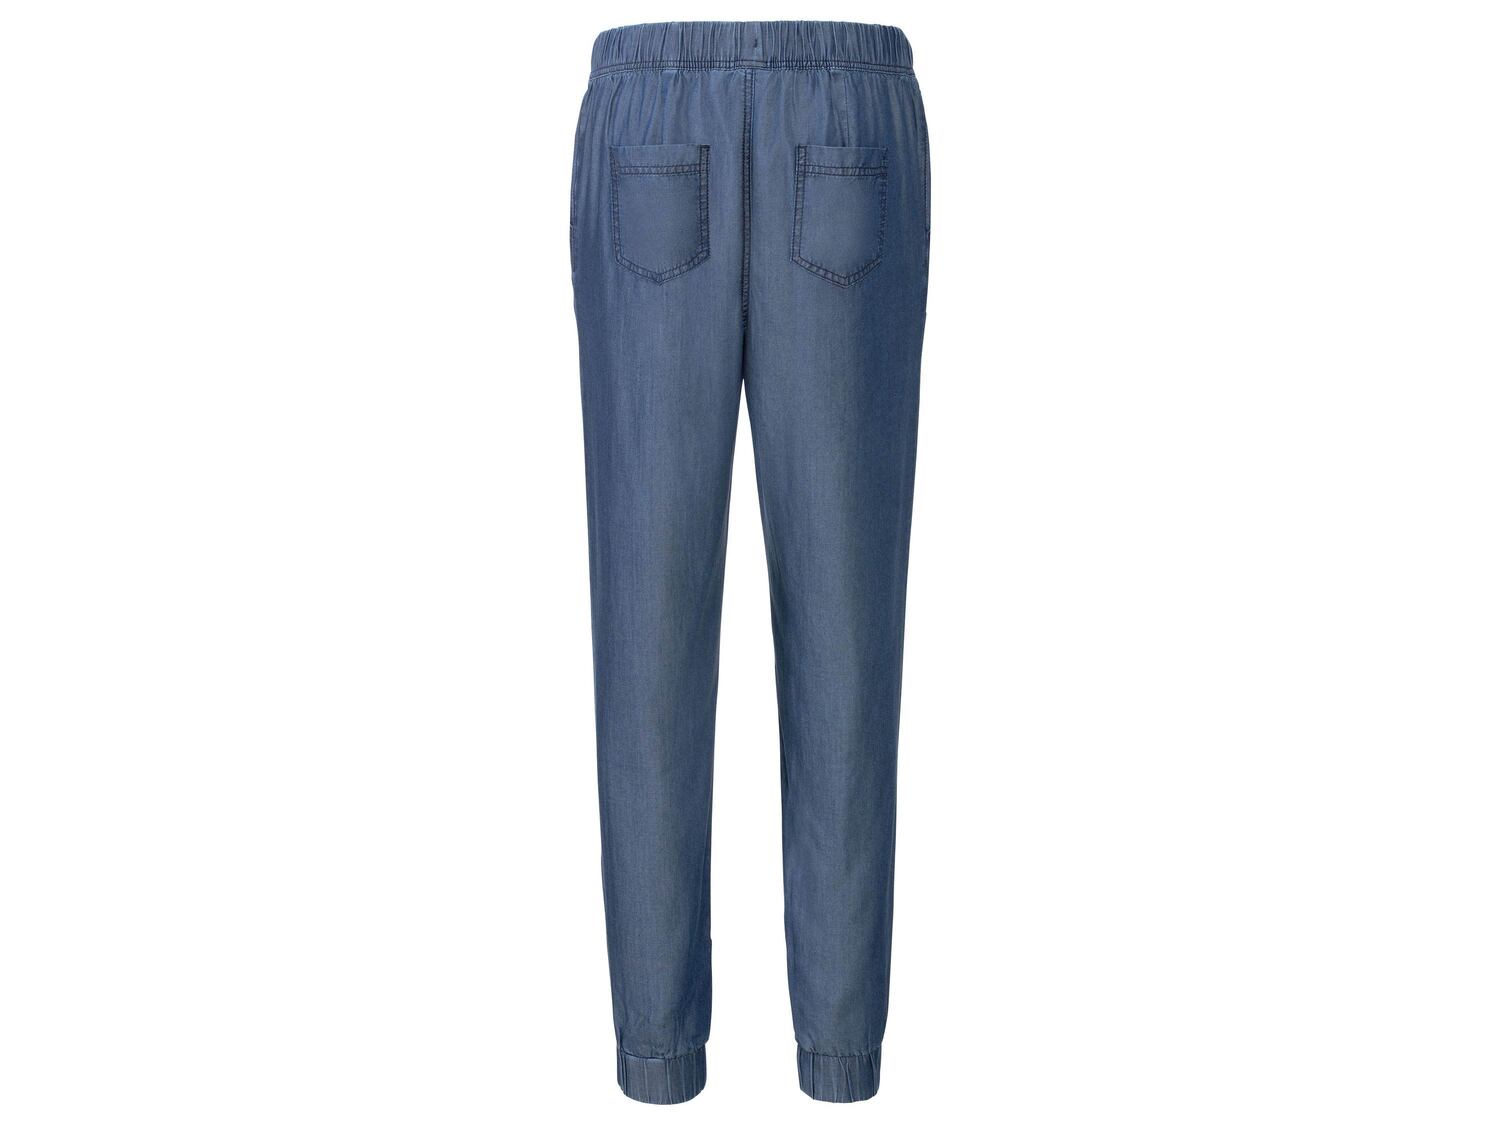 Spodnie damskie z lyocellu Esmara, cena 44,99 PLN 
- rozmiary: 36-46
- 100% lyocellu
- ...